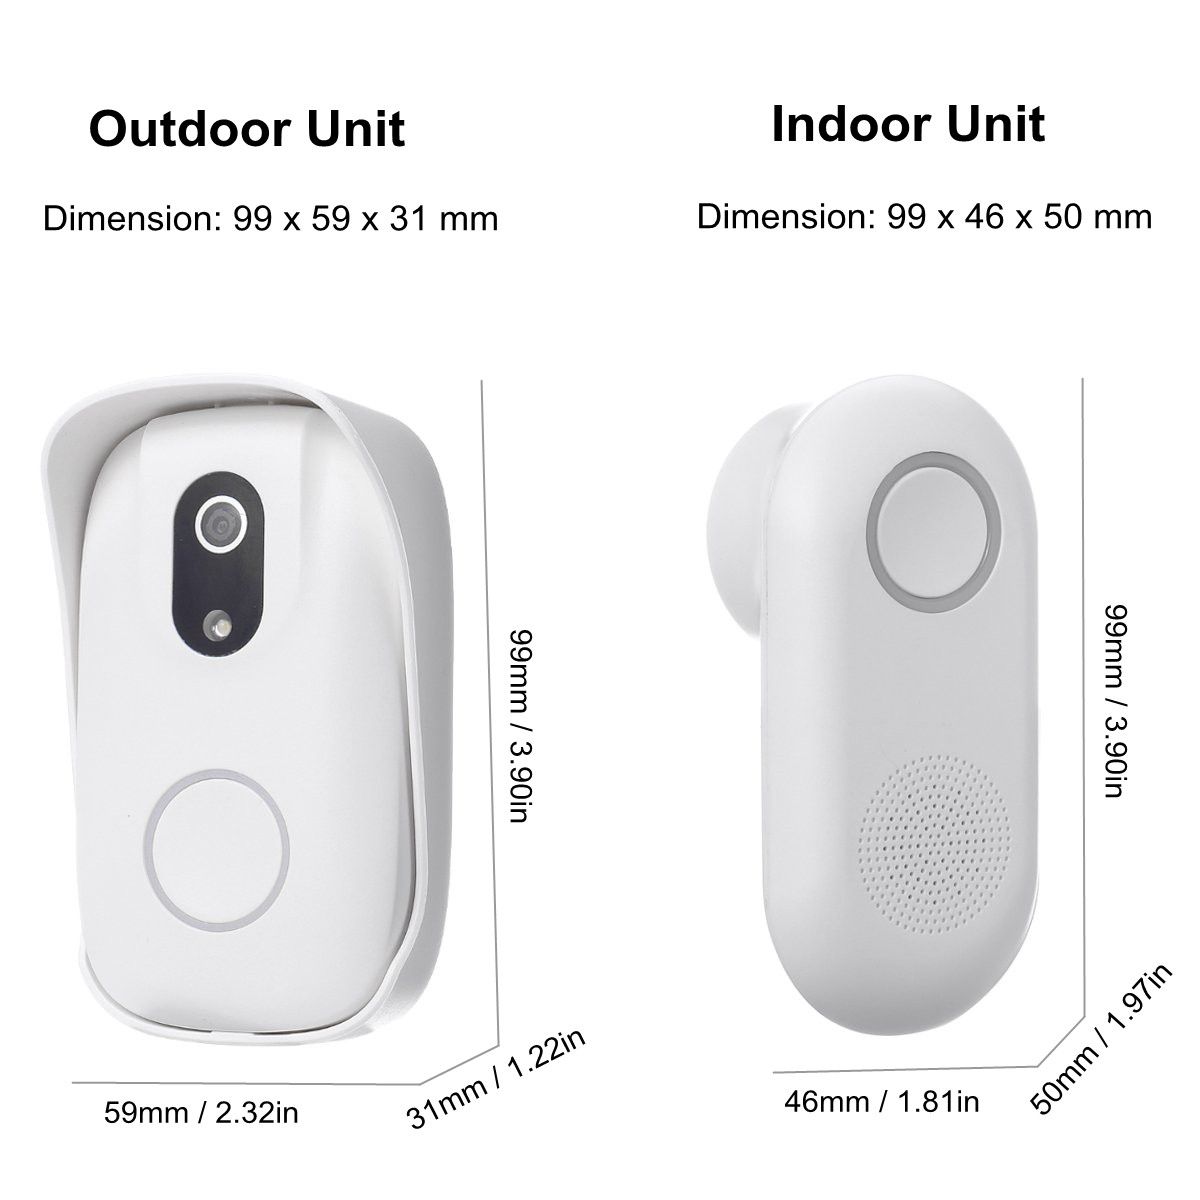 Smart-Wireless-Doorbell-Lens-Video-HD-Security-Camera-Night-Vision-App-Control-1669560